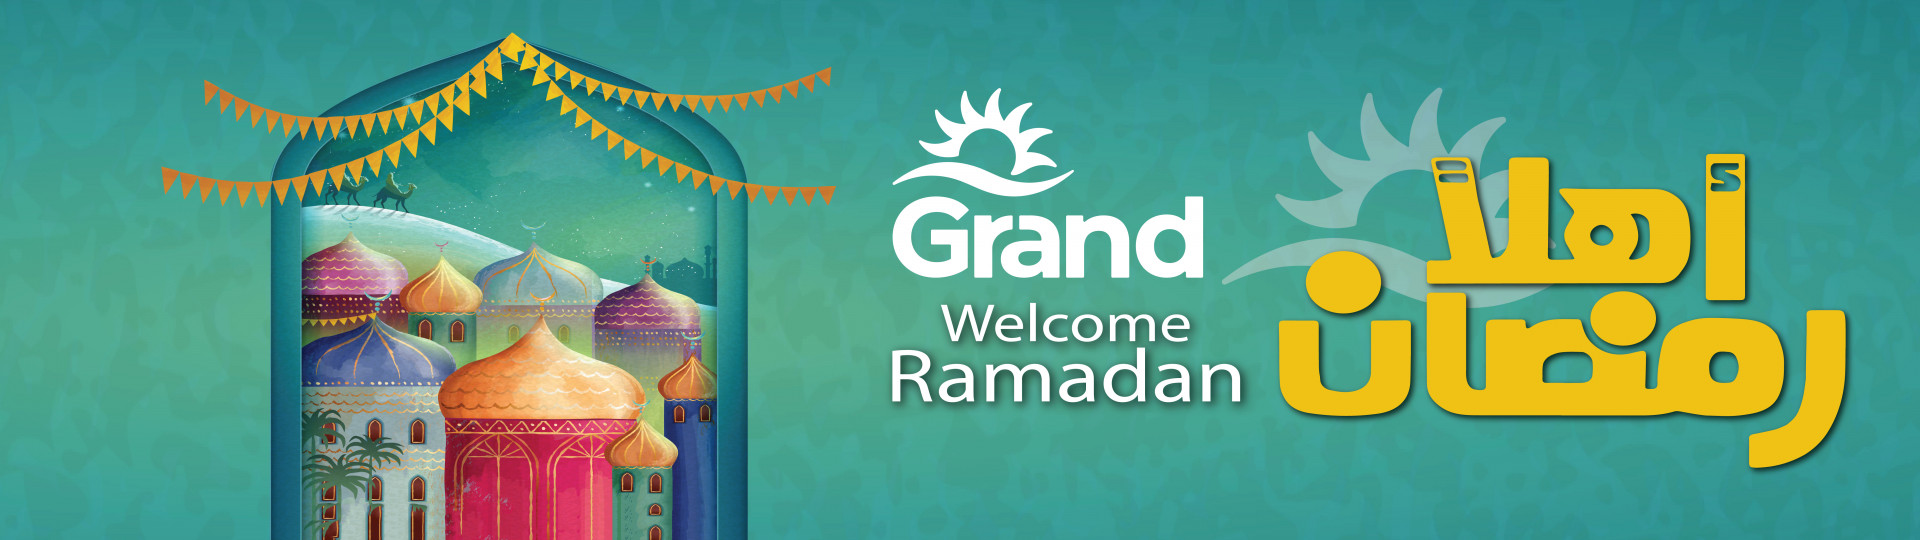 welcome ramadan